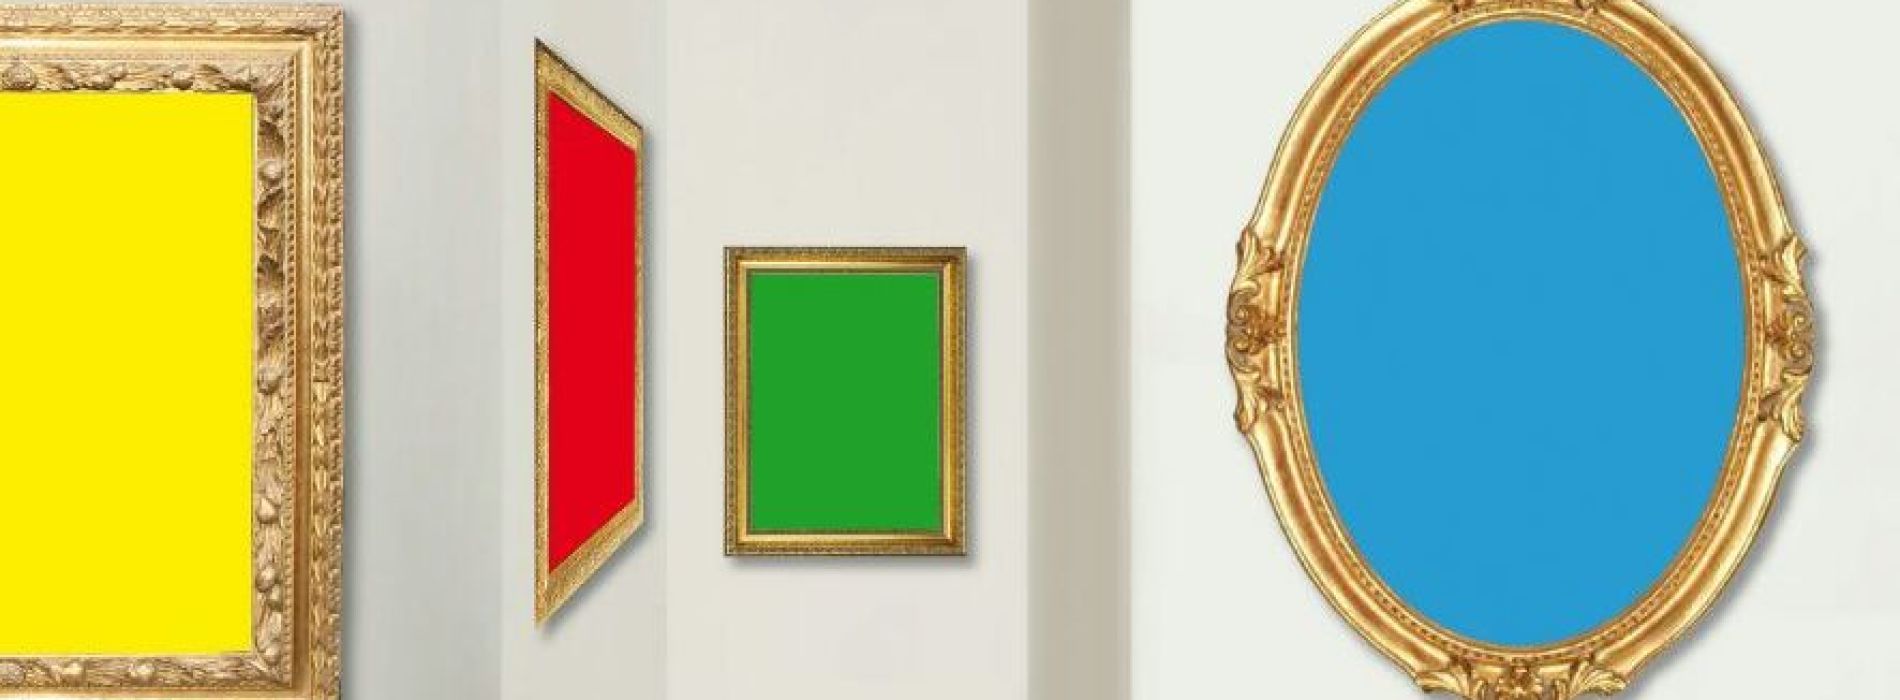 Geometrie & colori, quartetto d’arte in Pinacoteca a Salerno